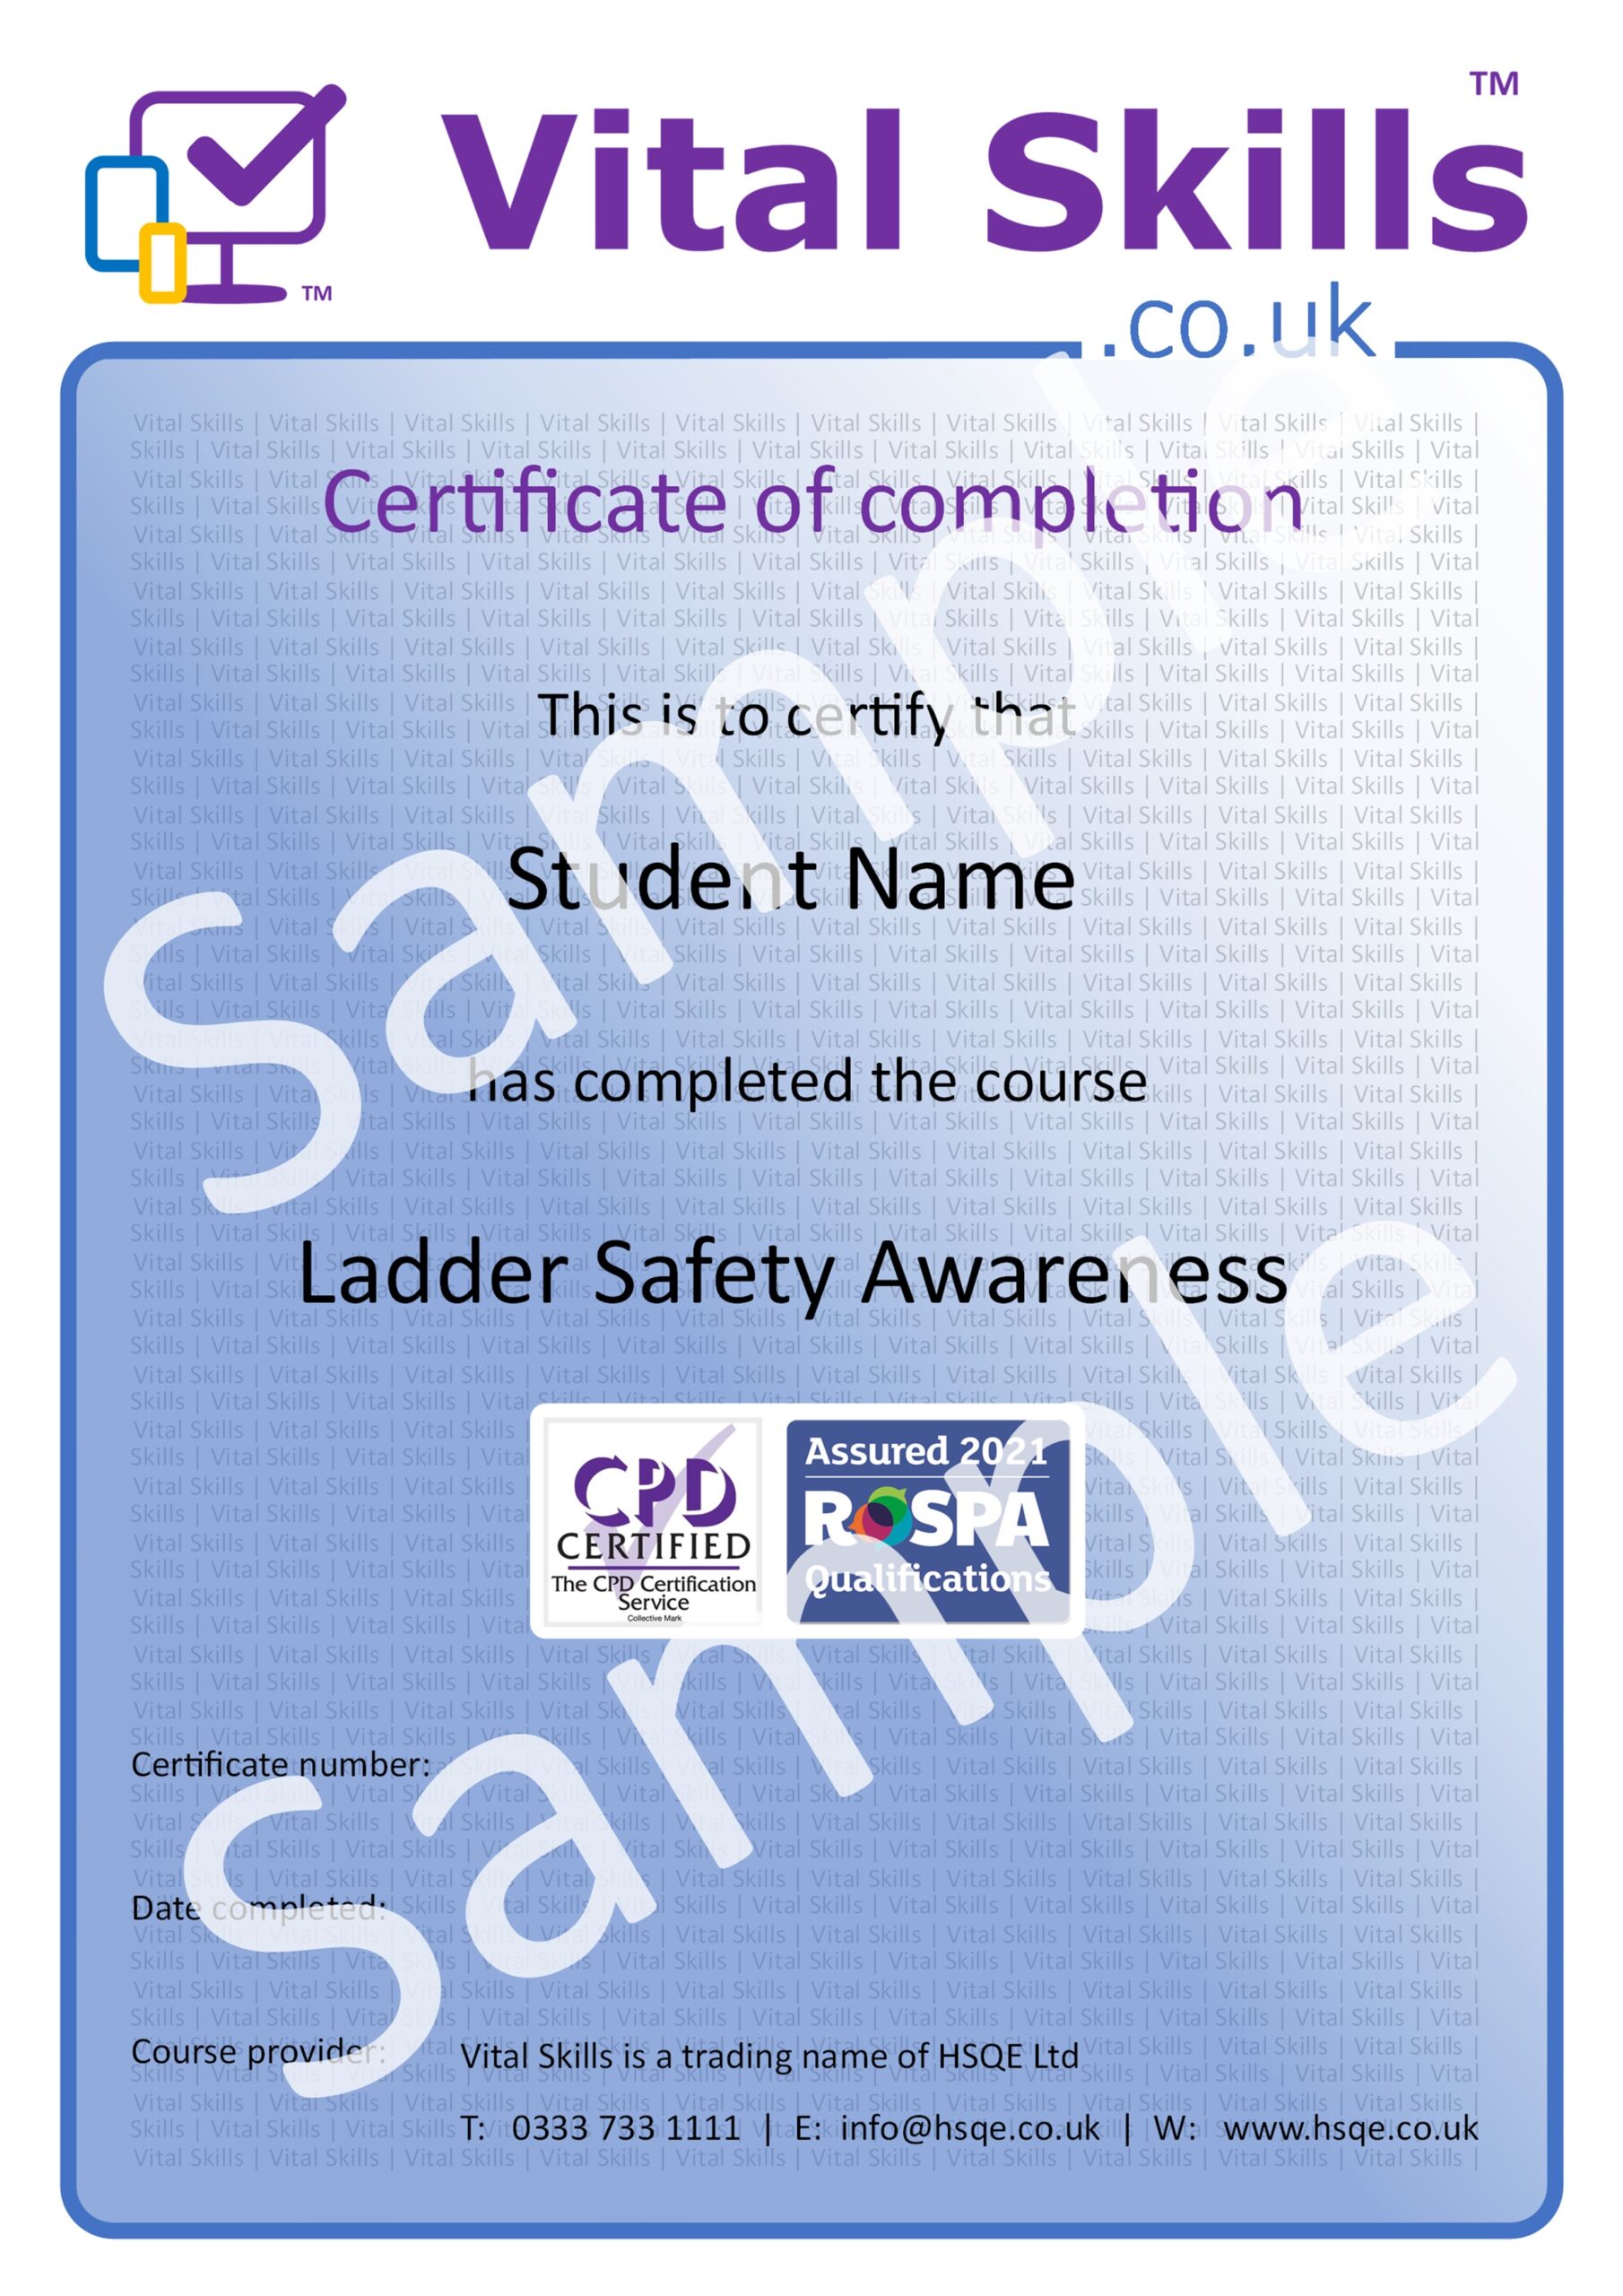 Ladder Safety Awareness Online Training Course Certificate HSQE Vital Skills